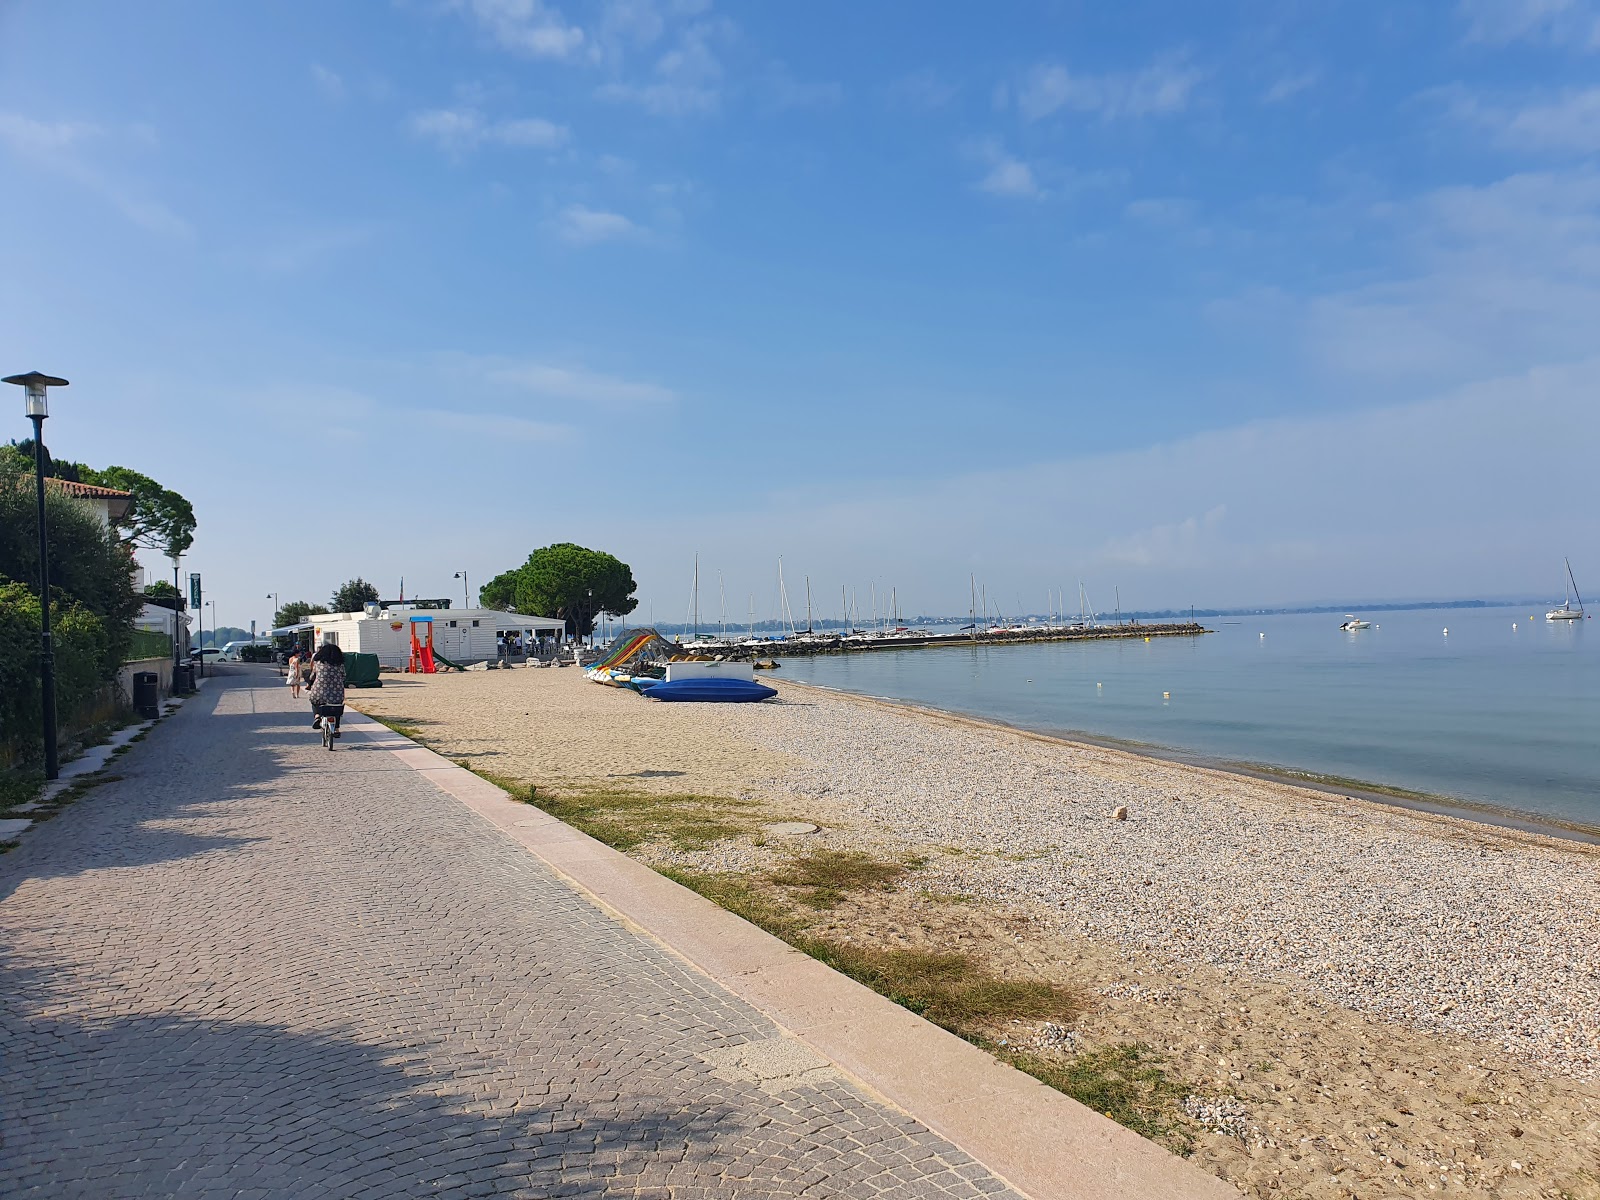 Spiaggia della Guglia'in fotoğrafı doğrudan plaj ile birlikte